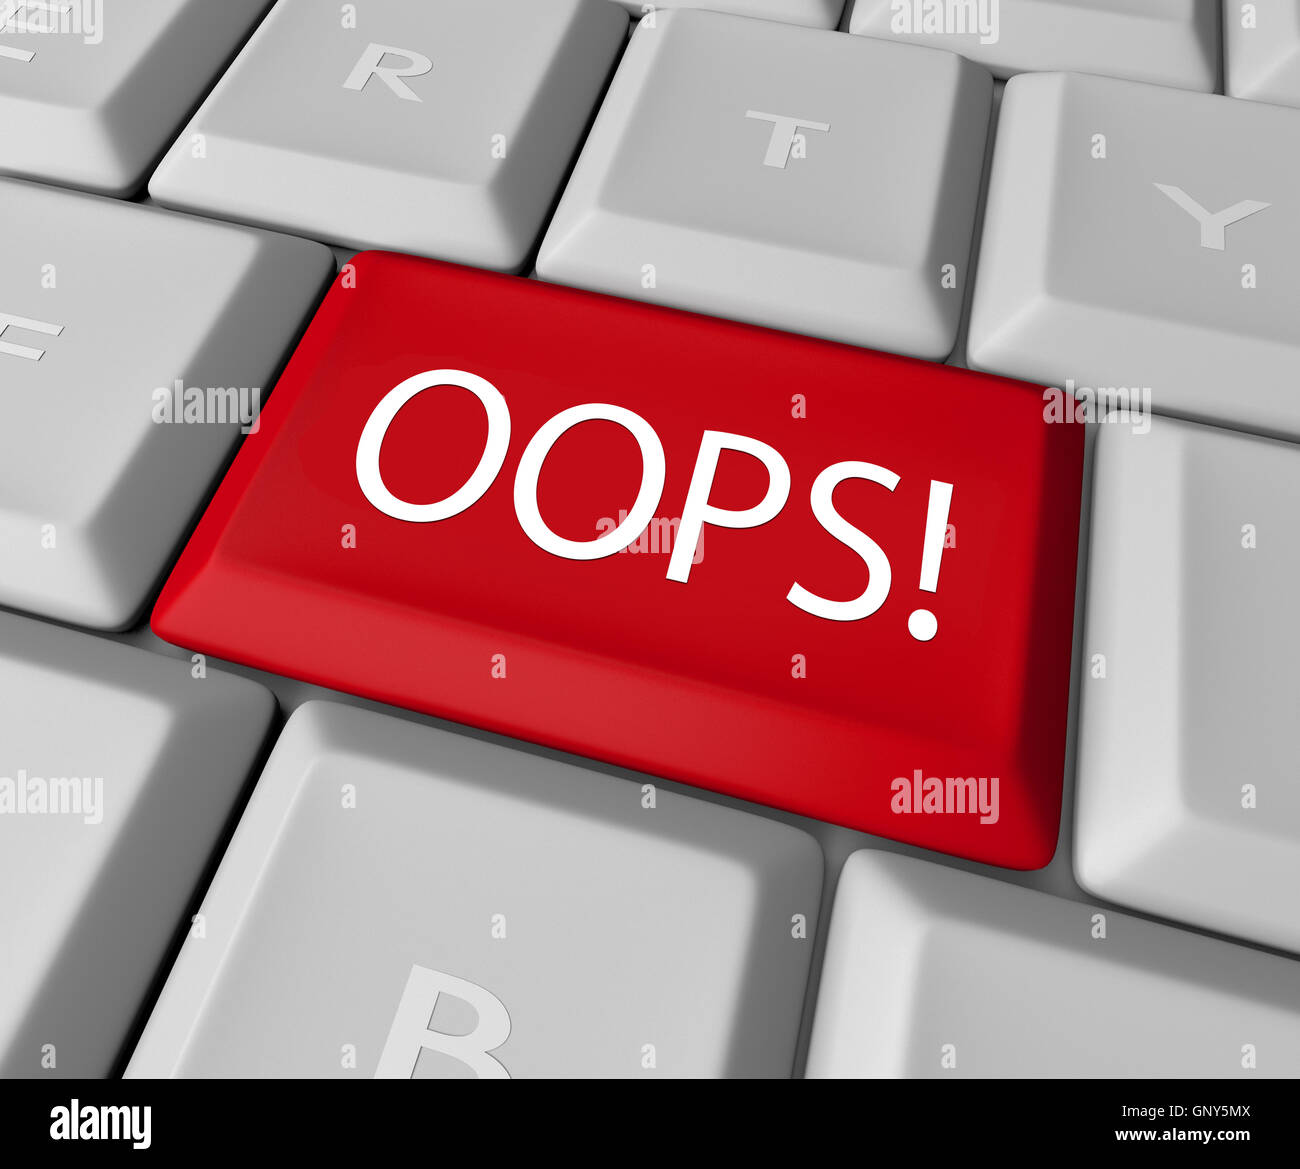 Oops Mistake Correction Key on Computer Keyboard Stock Photo